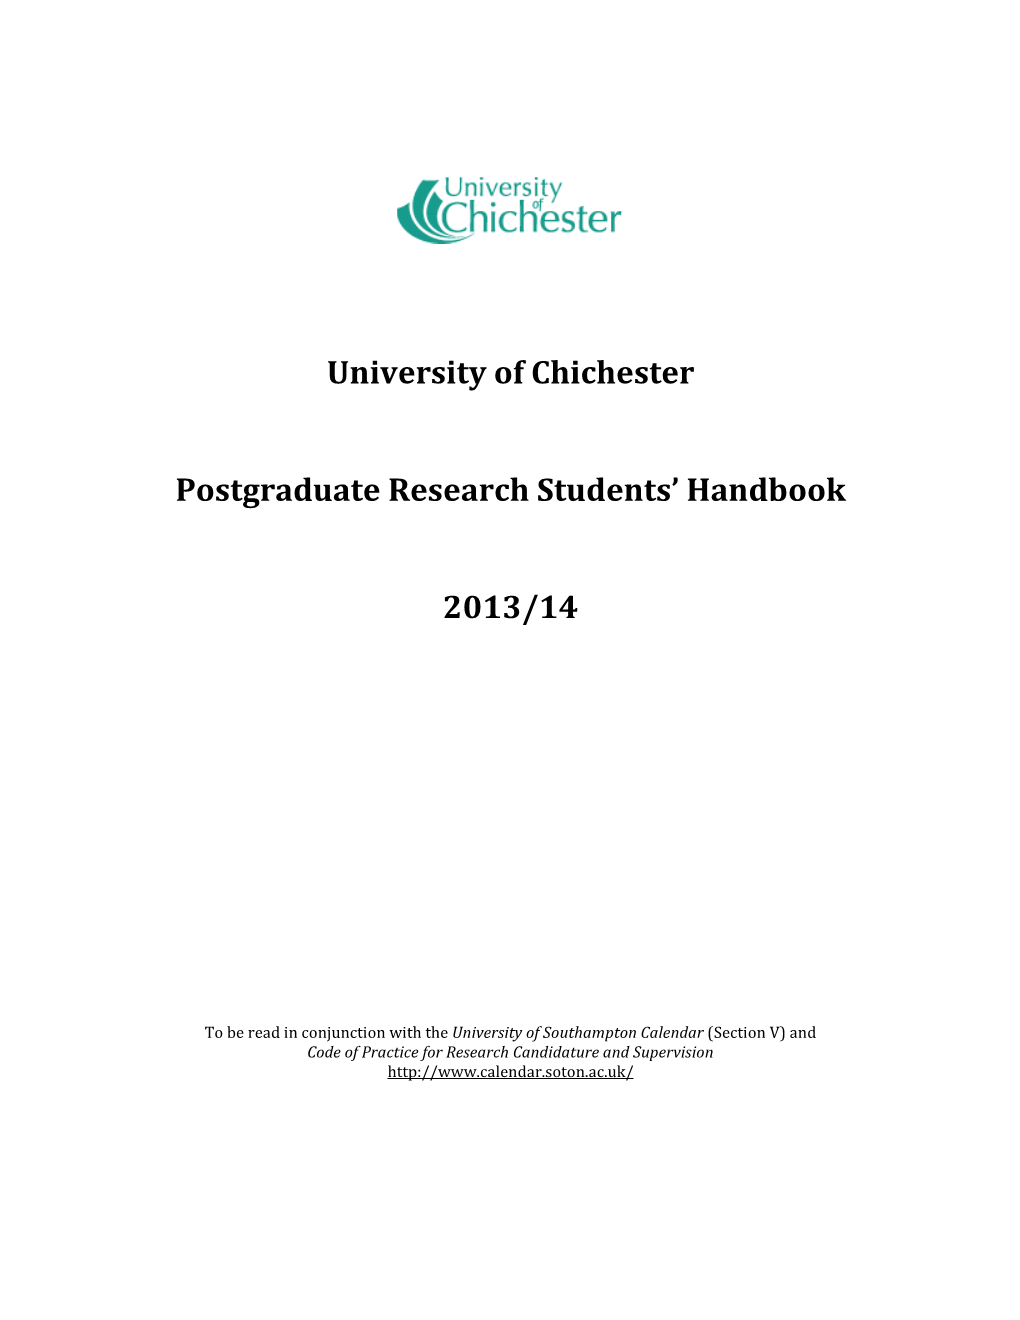 Postgraduate Student Handbook – University of Chichester